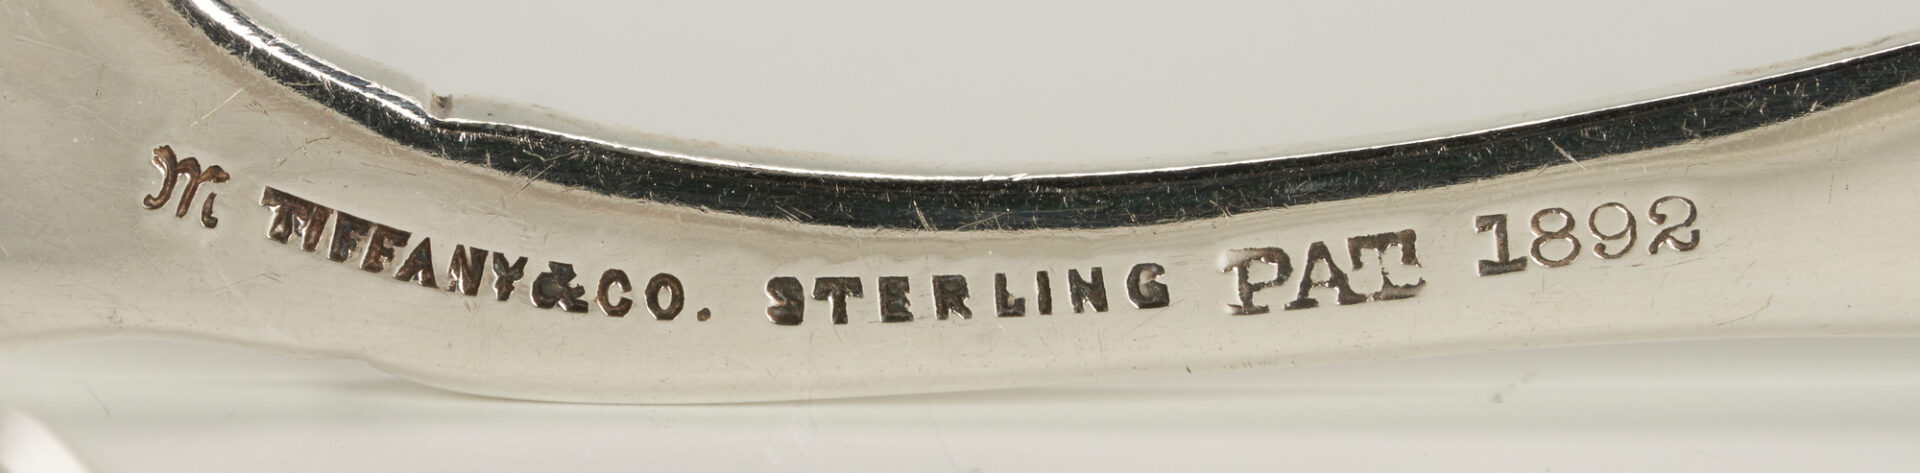 Lot 768: Six Individual Sterling silver Asparagus Tongs incl. Tiffany